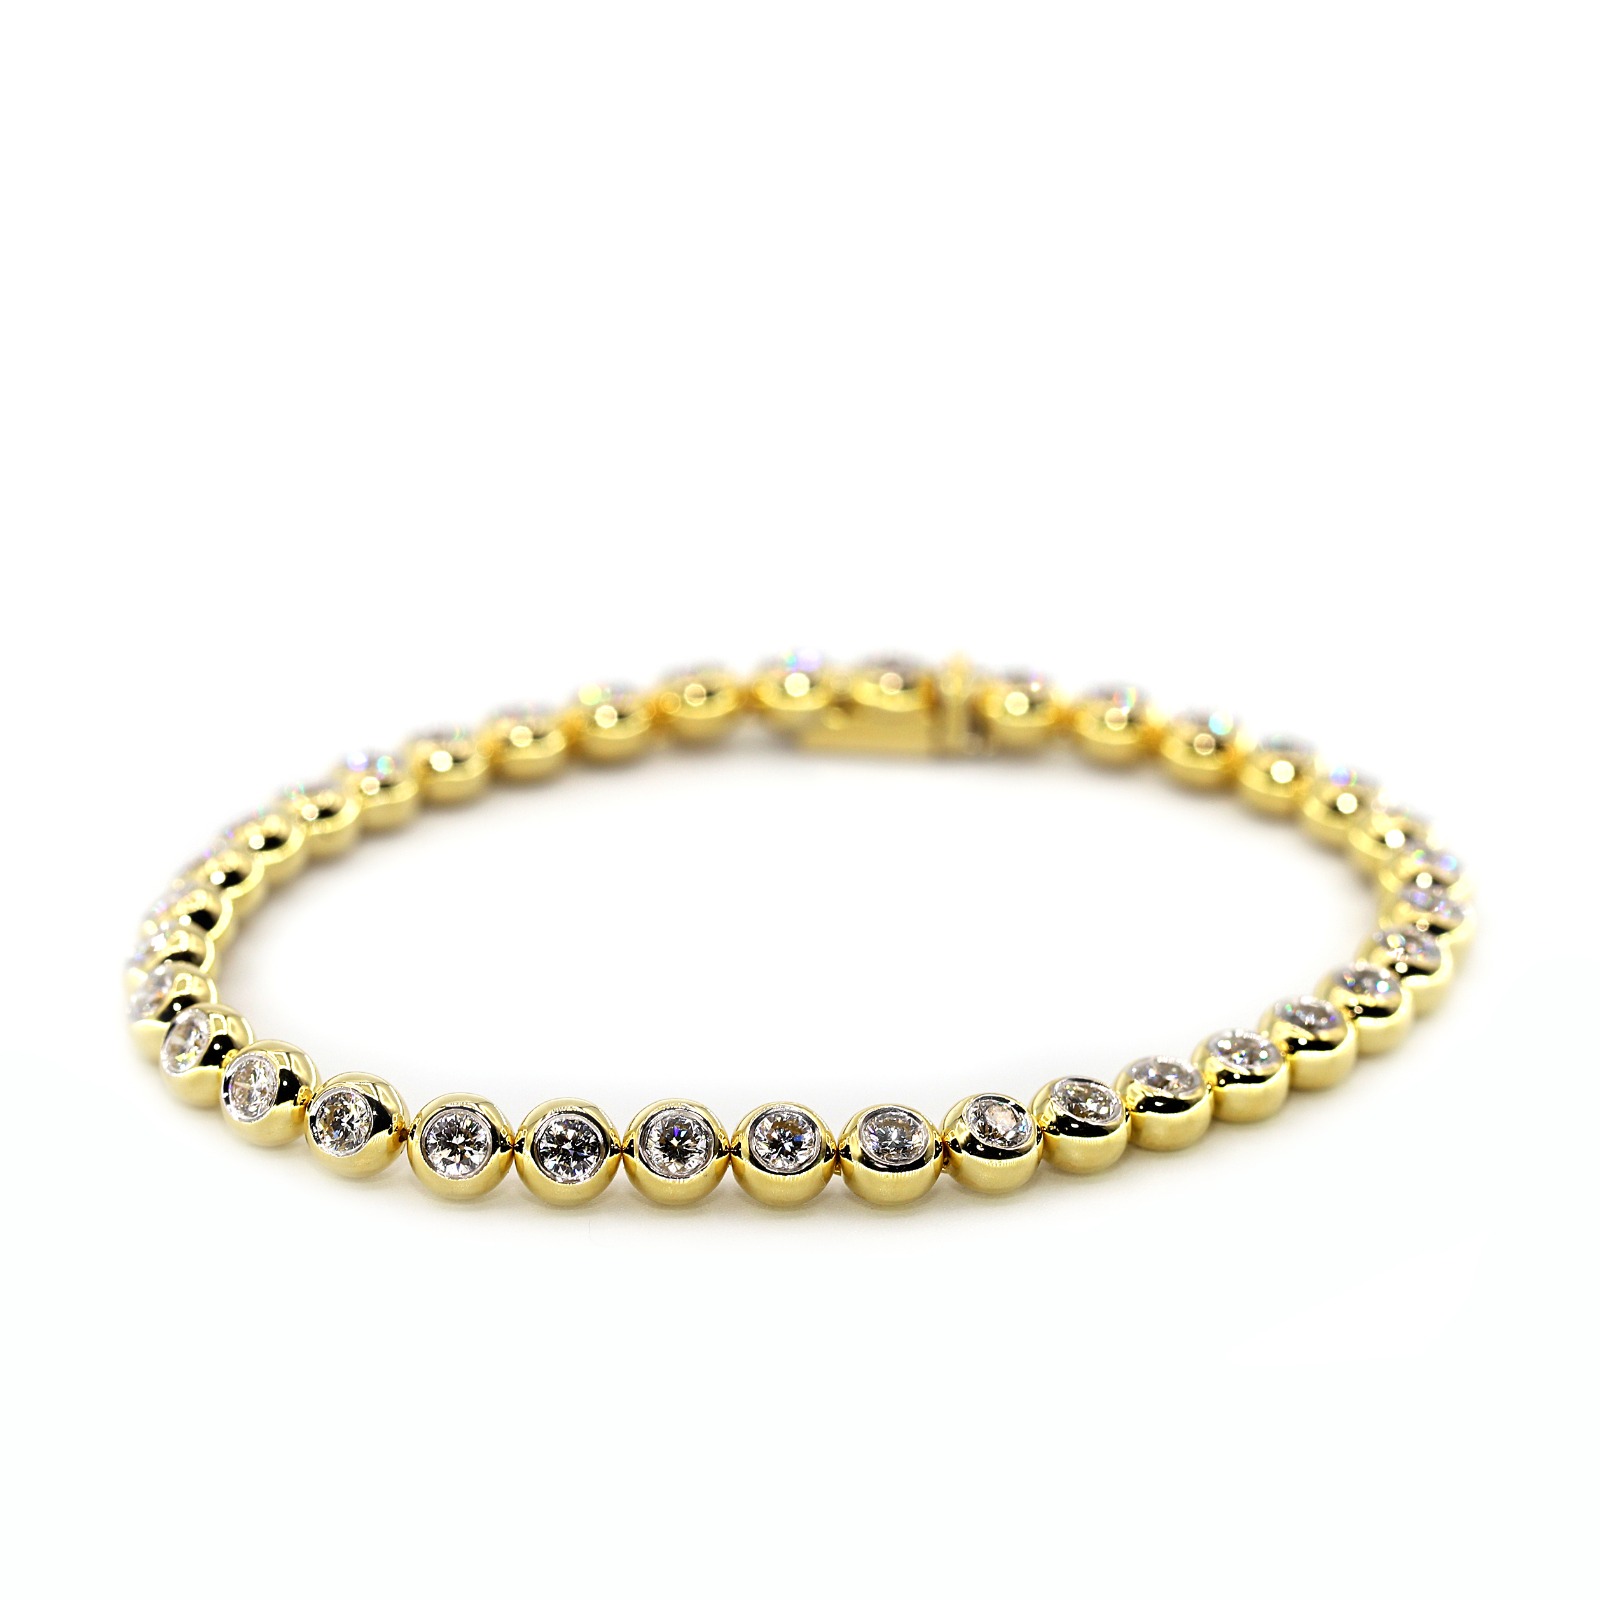 18k White Gold Tennis Bracelet with Diamonds - Daily Offer By GoldenEyeJewellery.net